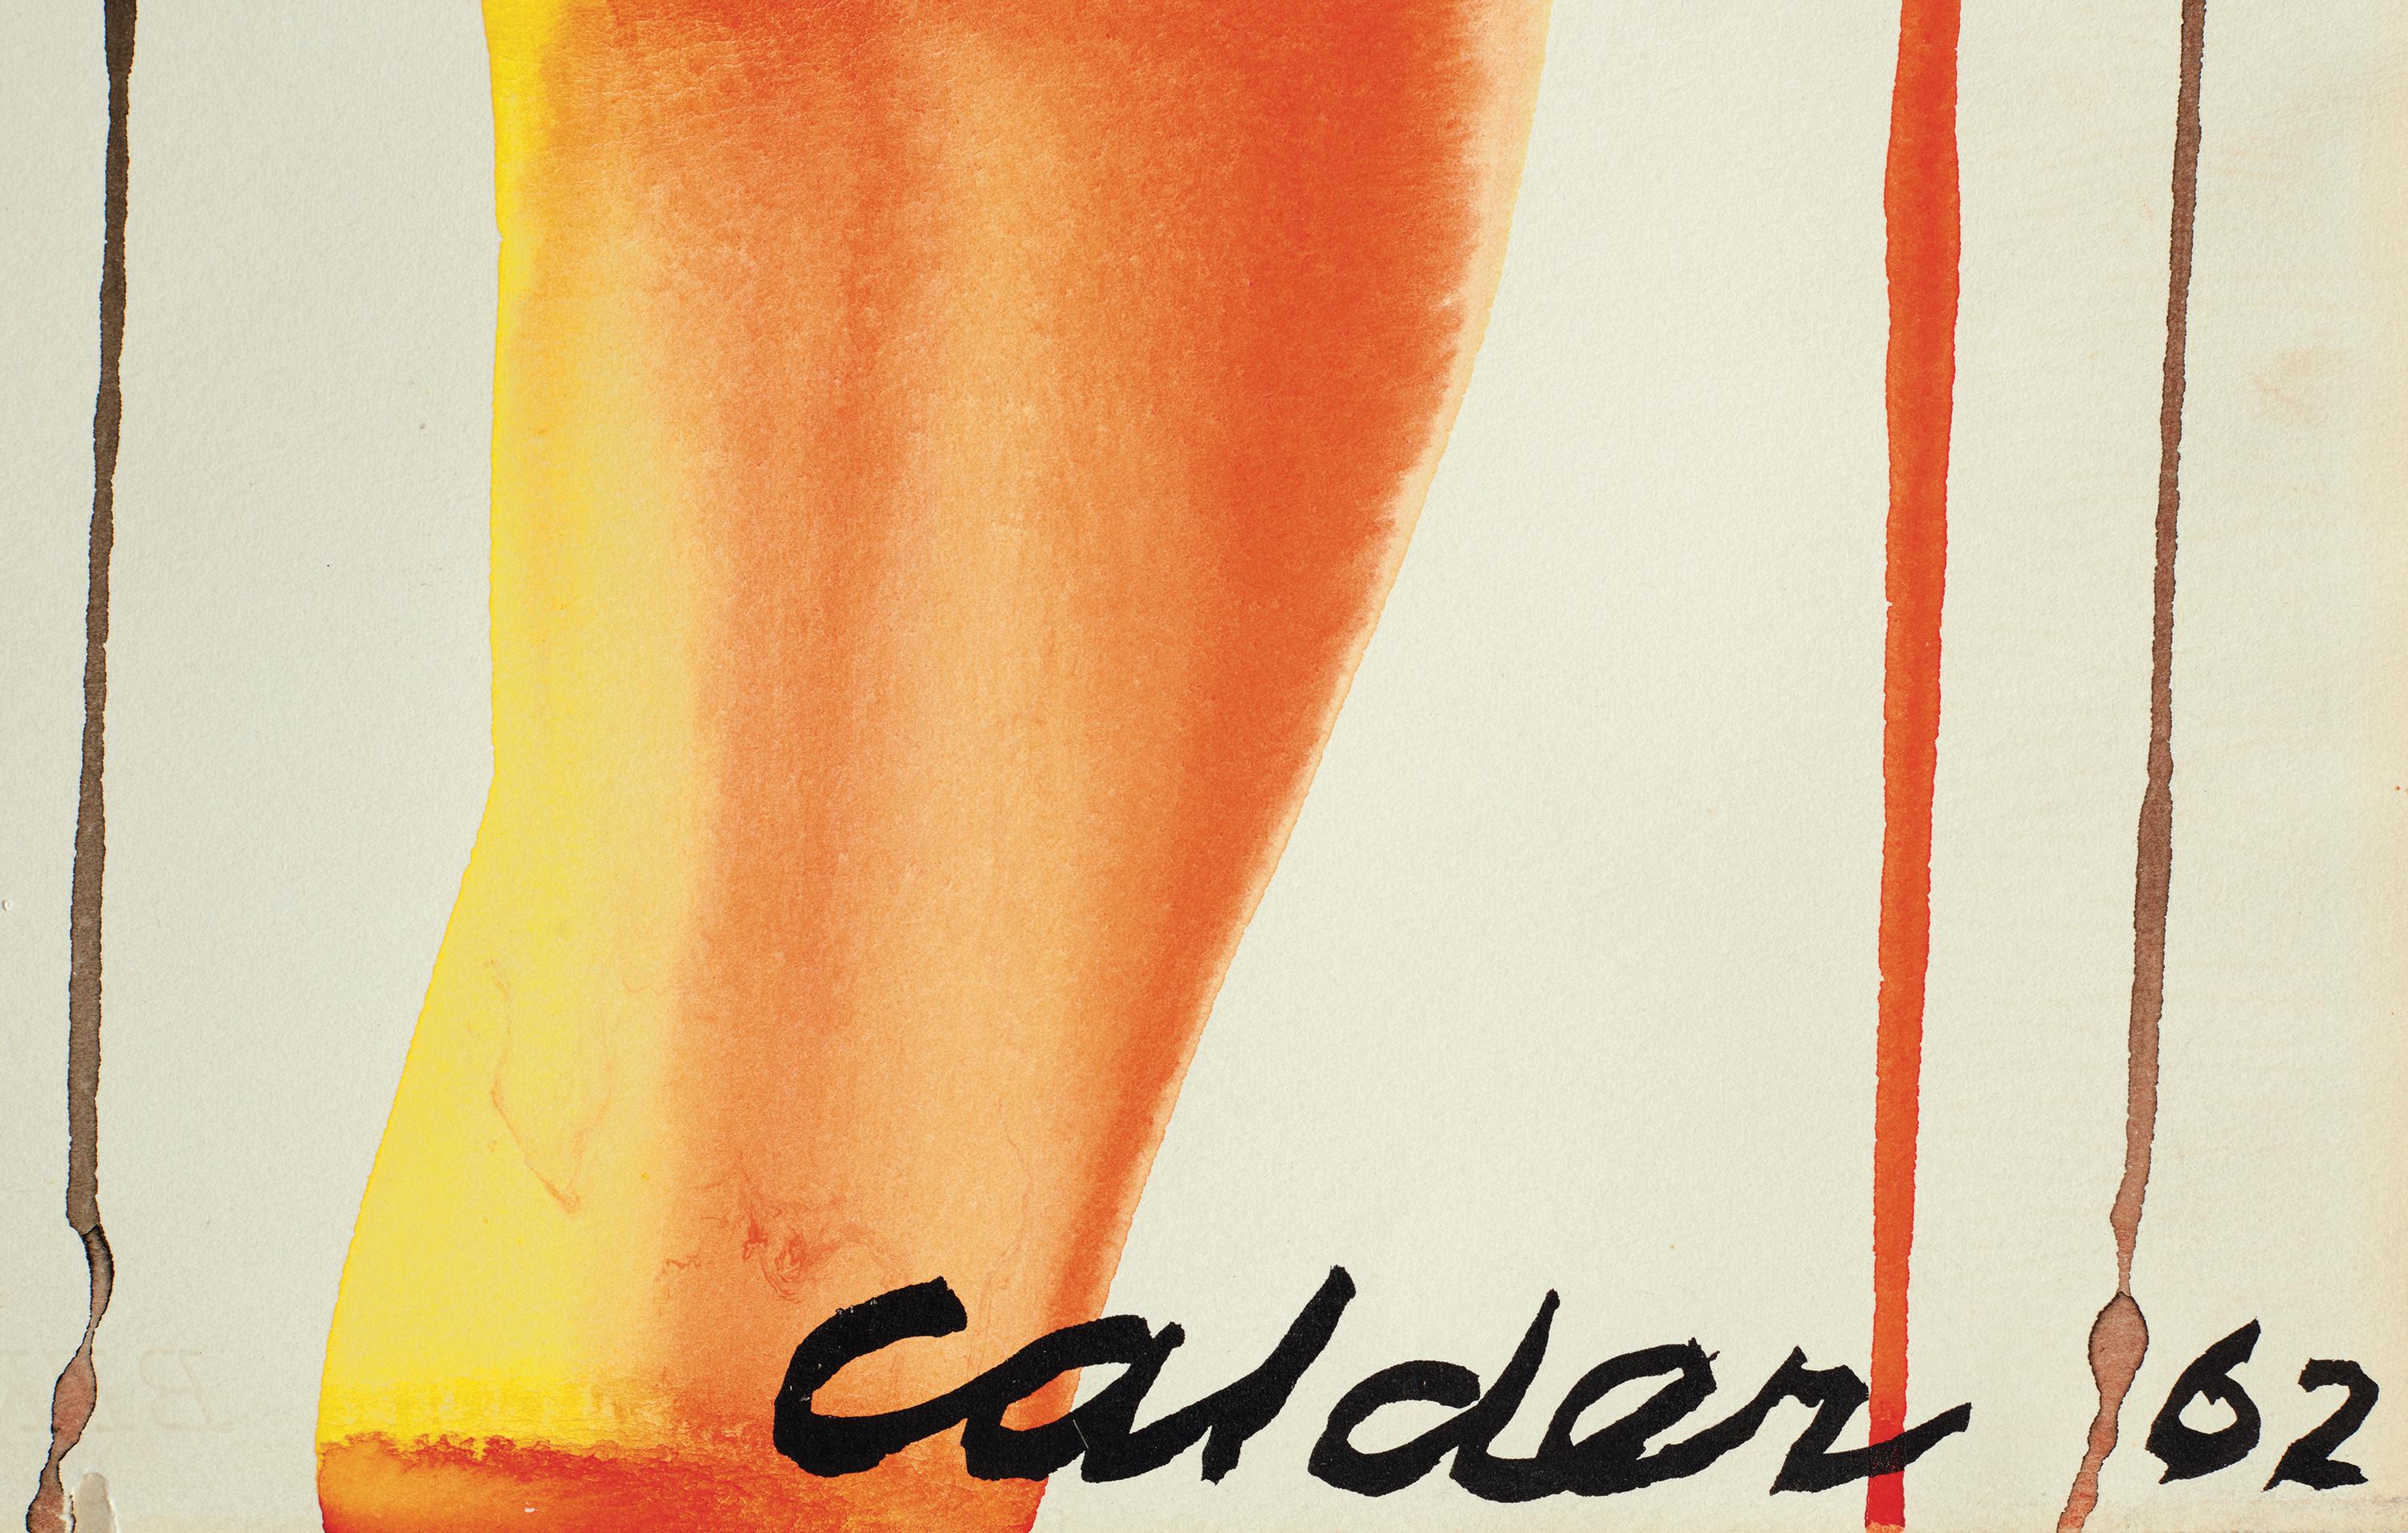 Tracks - Painting by Alexander Calder